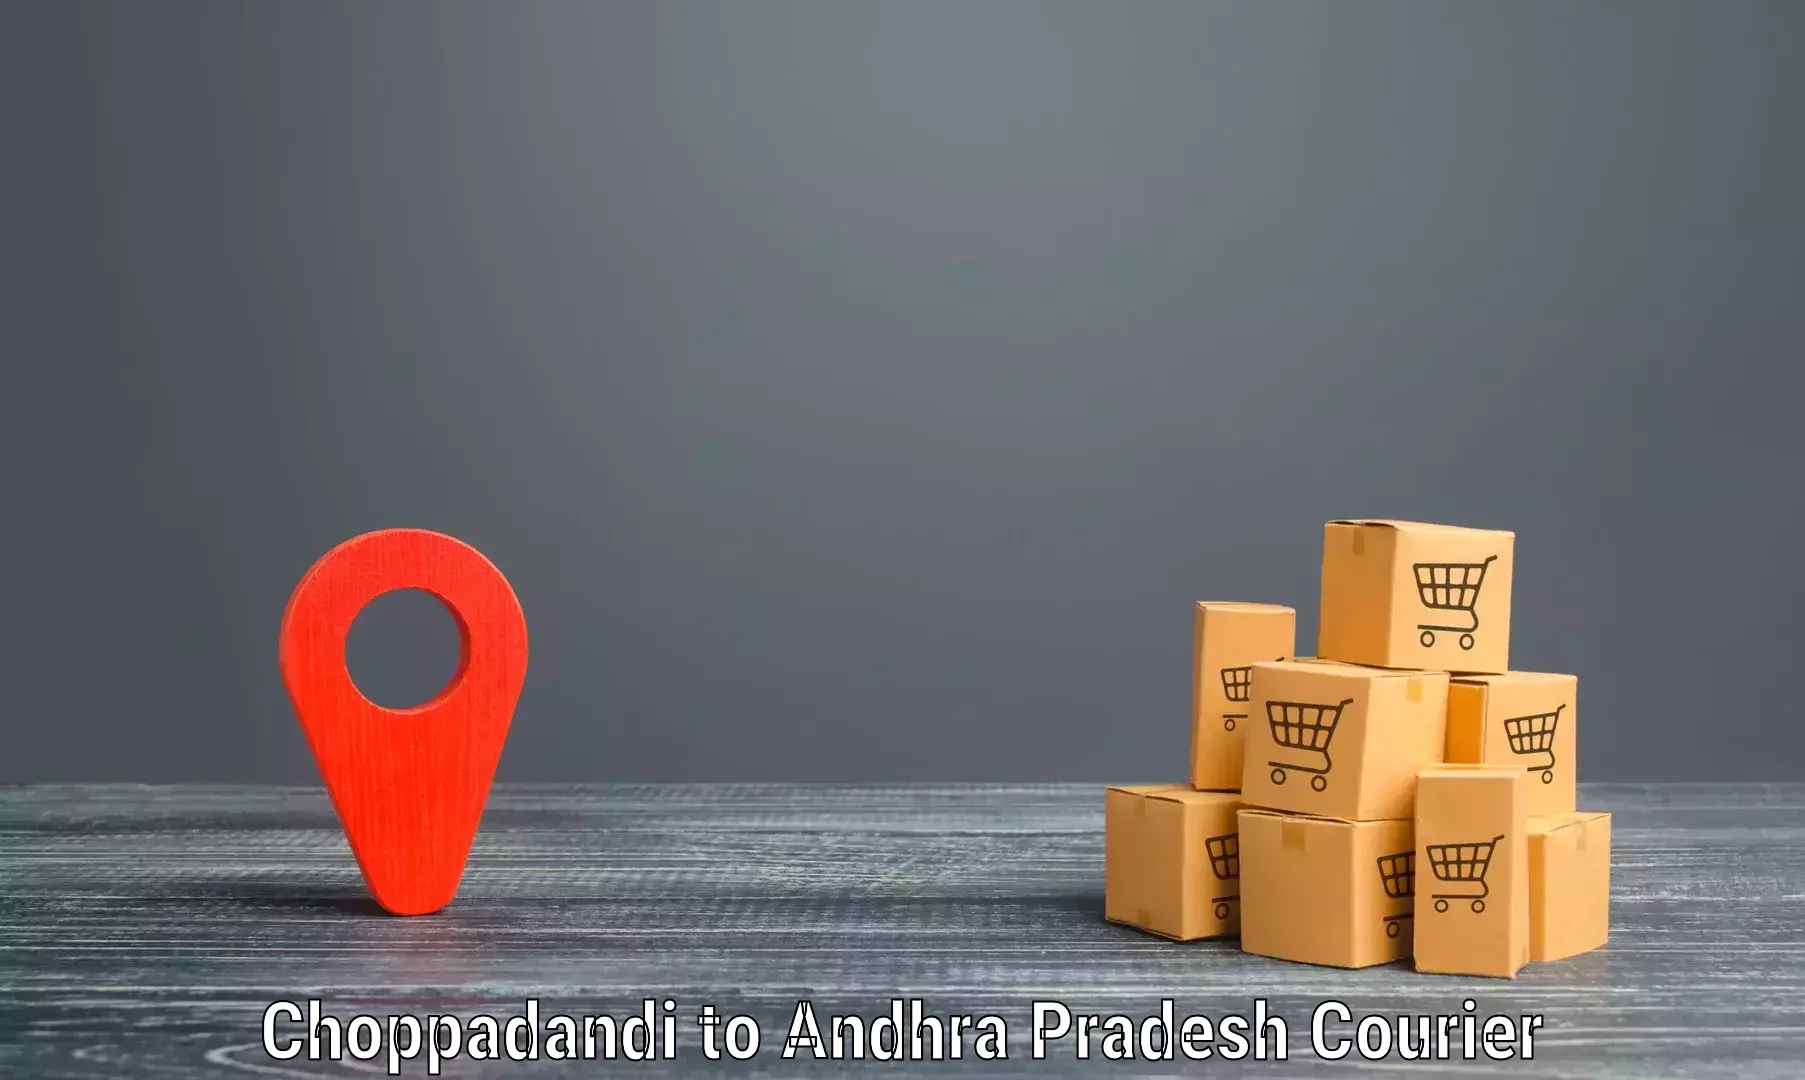 Advanced courier platforms Choppadandi to Andhra Pradesh